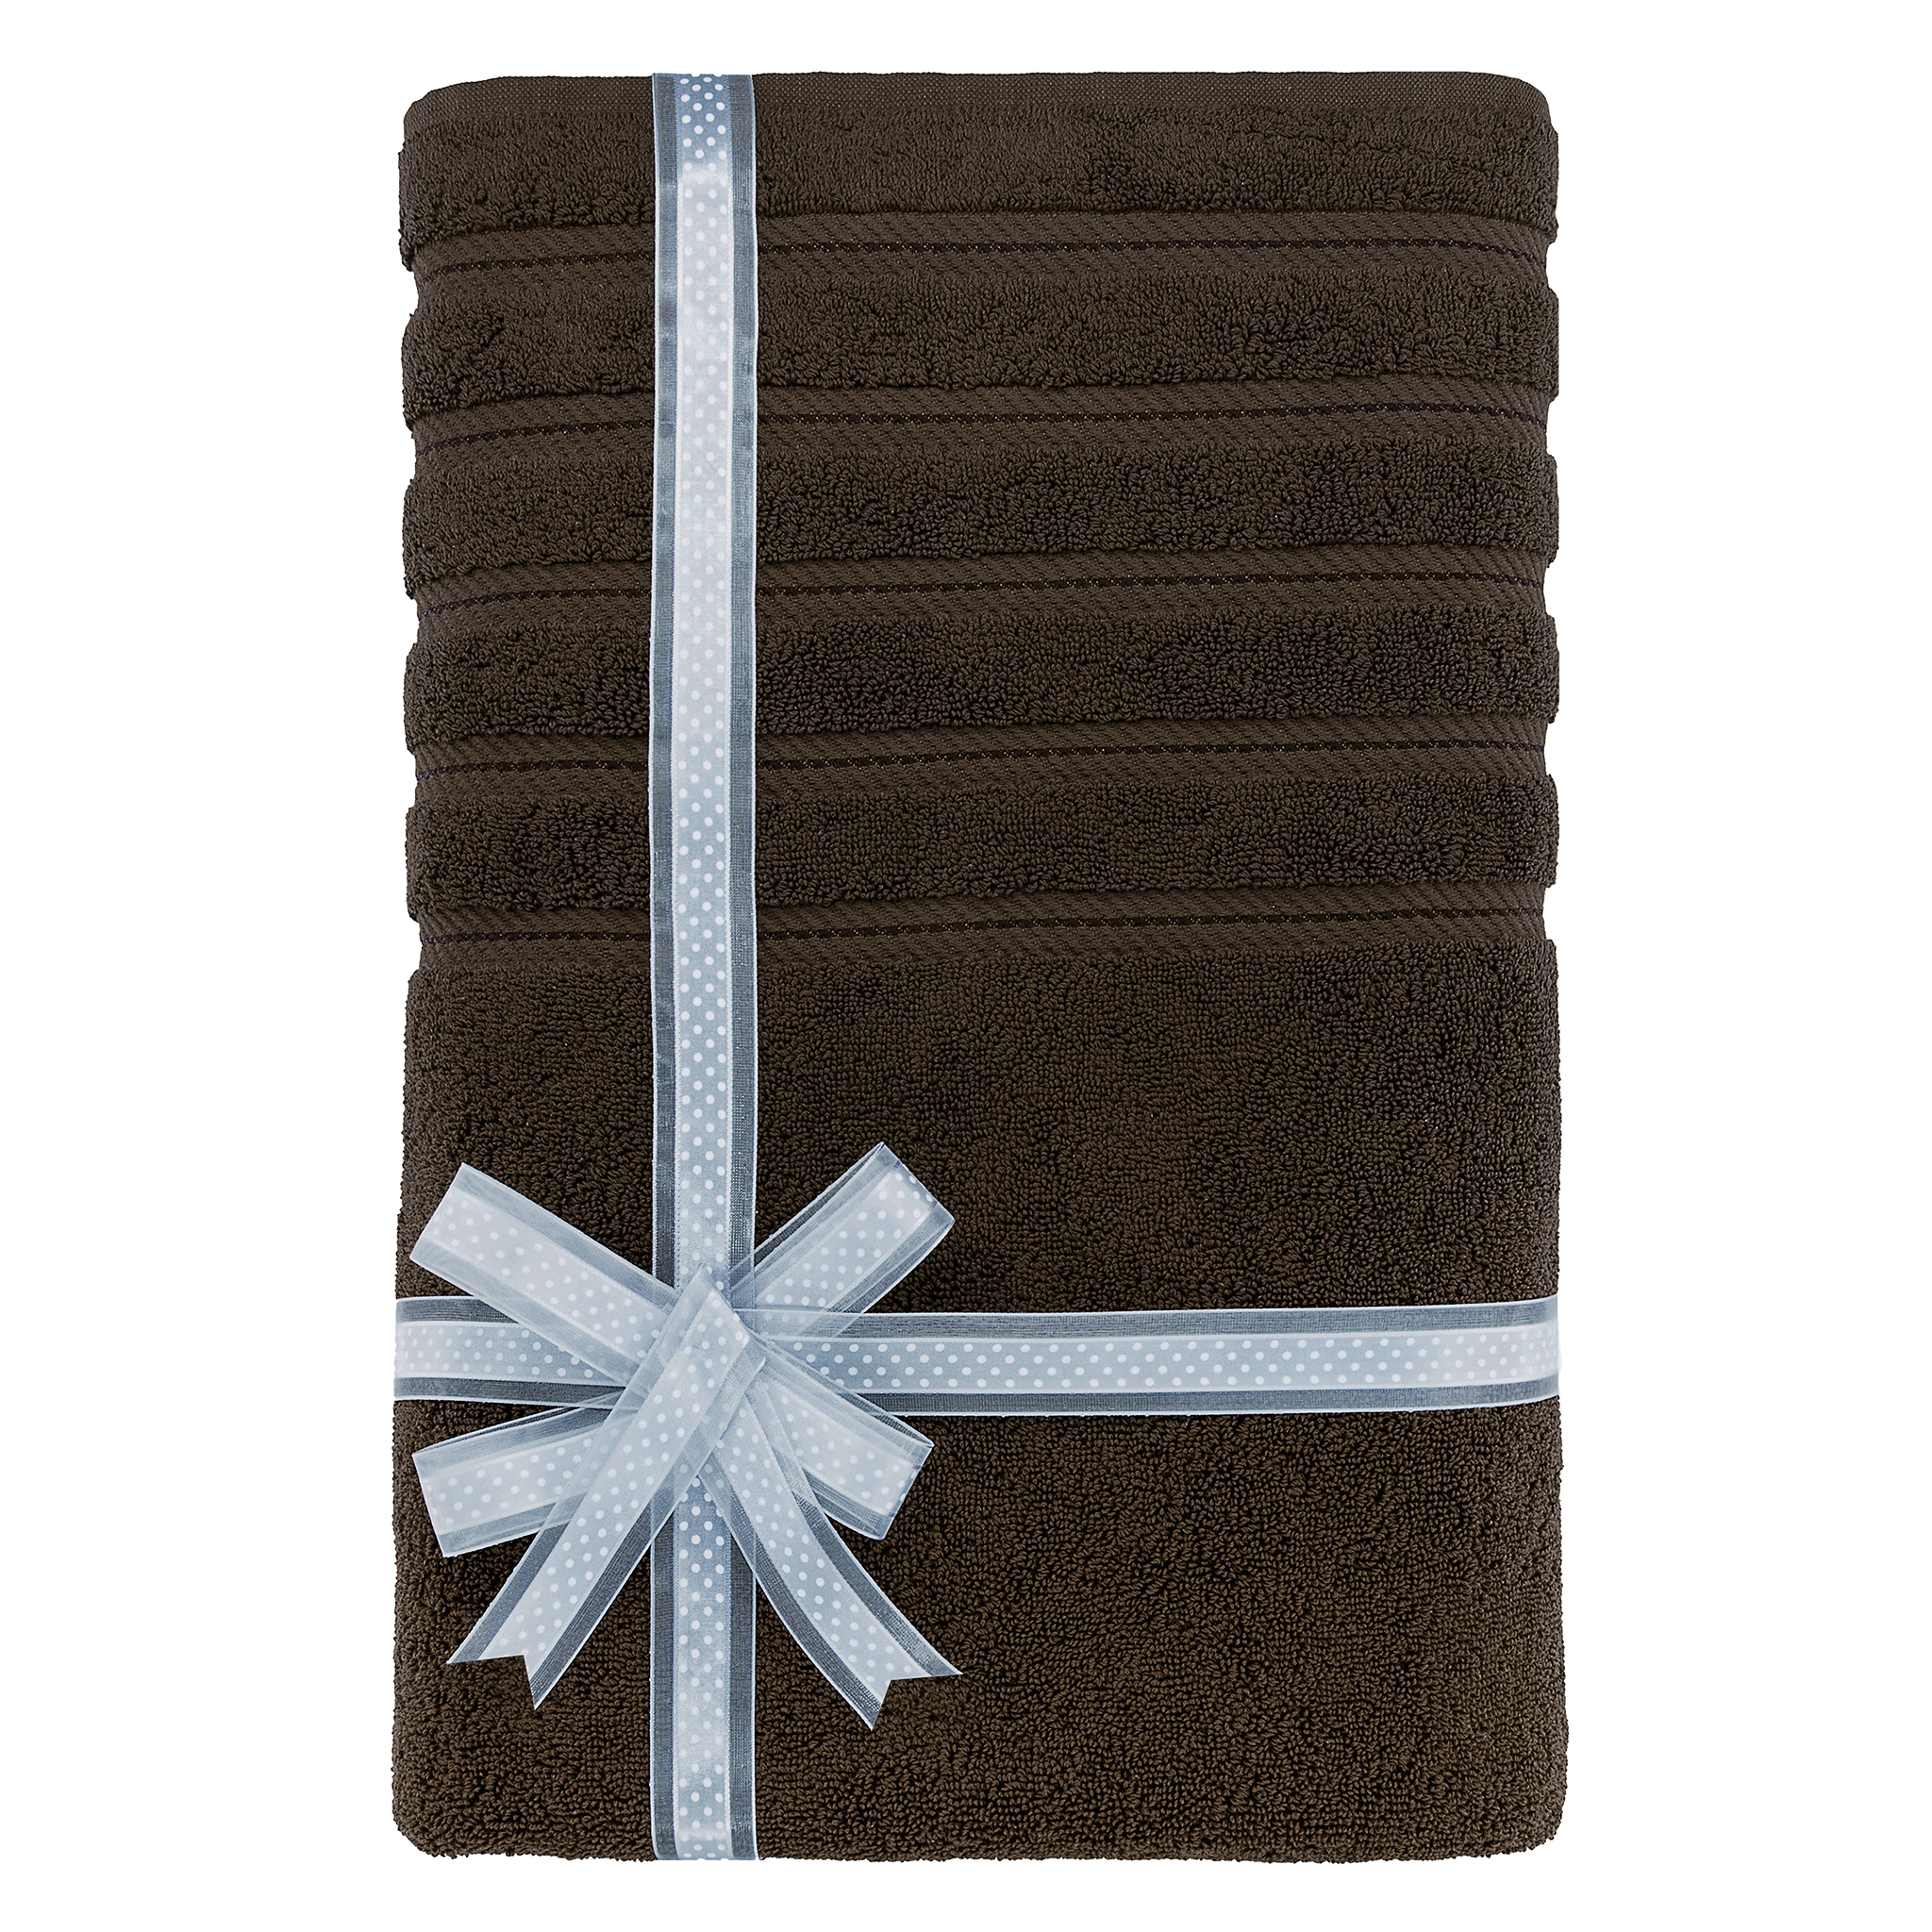 American Soft Linen - 35x70 Jumbo Bath Sheet Turkish Bath Towel - 16 Piece Case Pack - Chocolate-Brown - 3